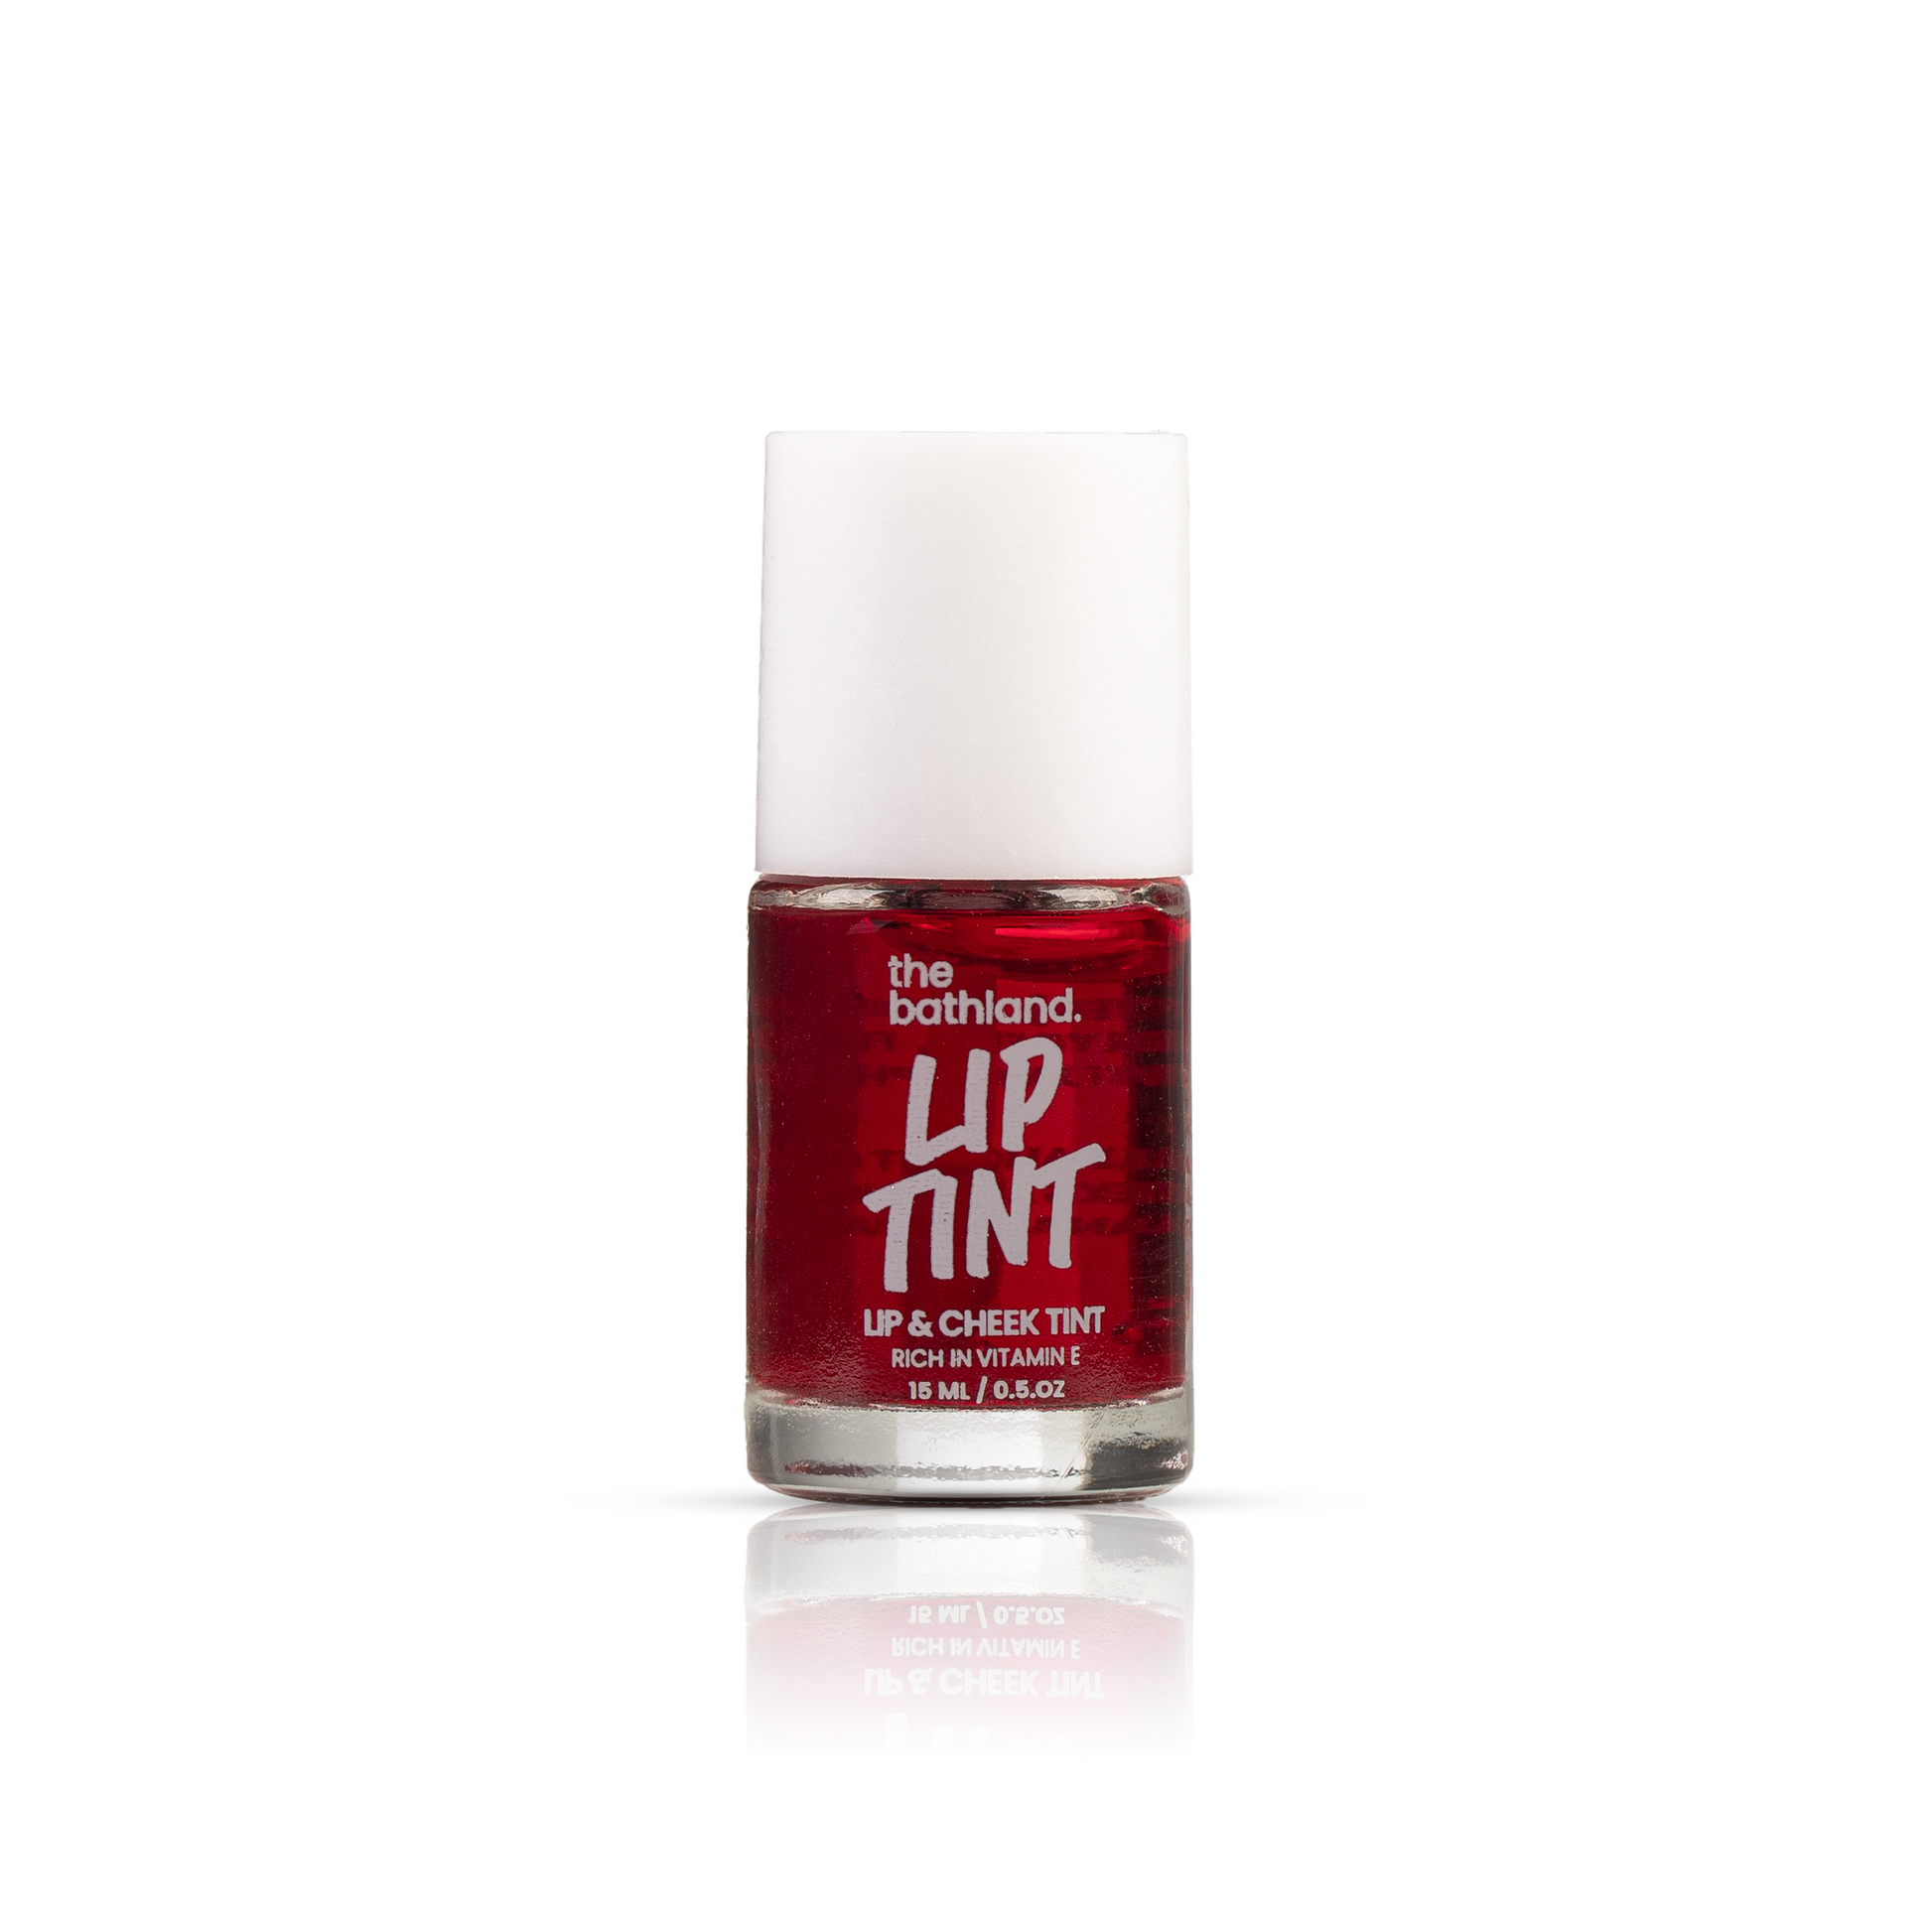 Lip Tint Its's Tint - Bellafemme